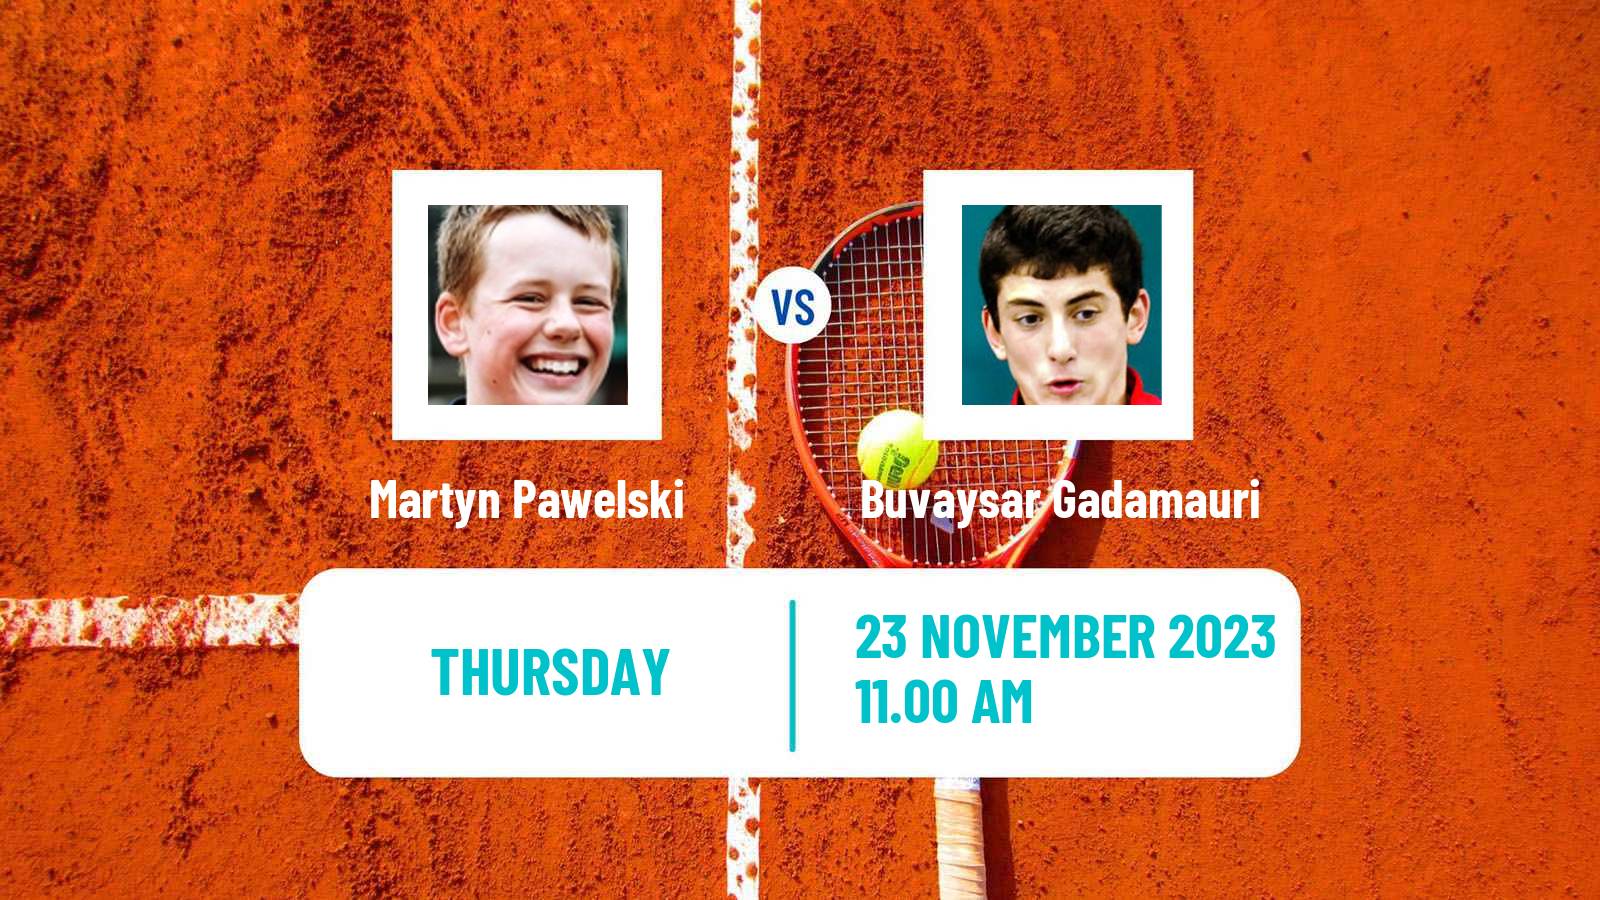 Tennis ITF M25 Monastir 9 Men Martyn Pawelski - Buvaysar Gadamauri